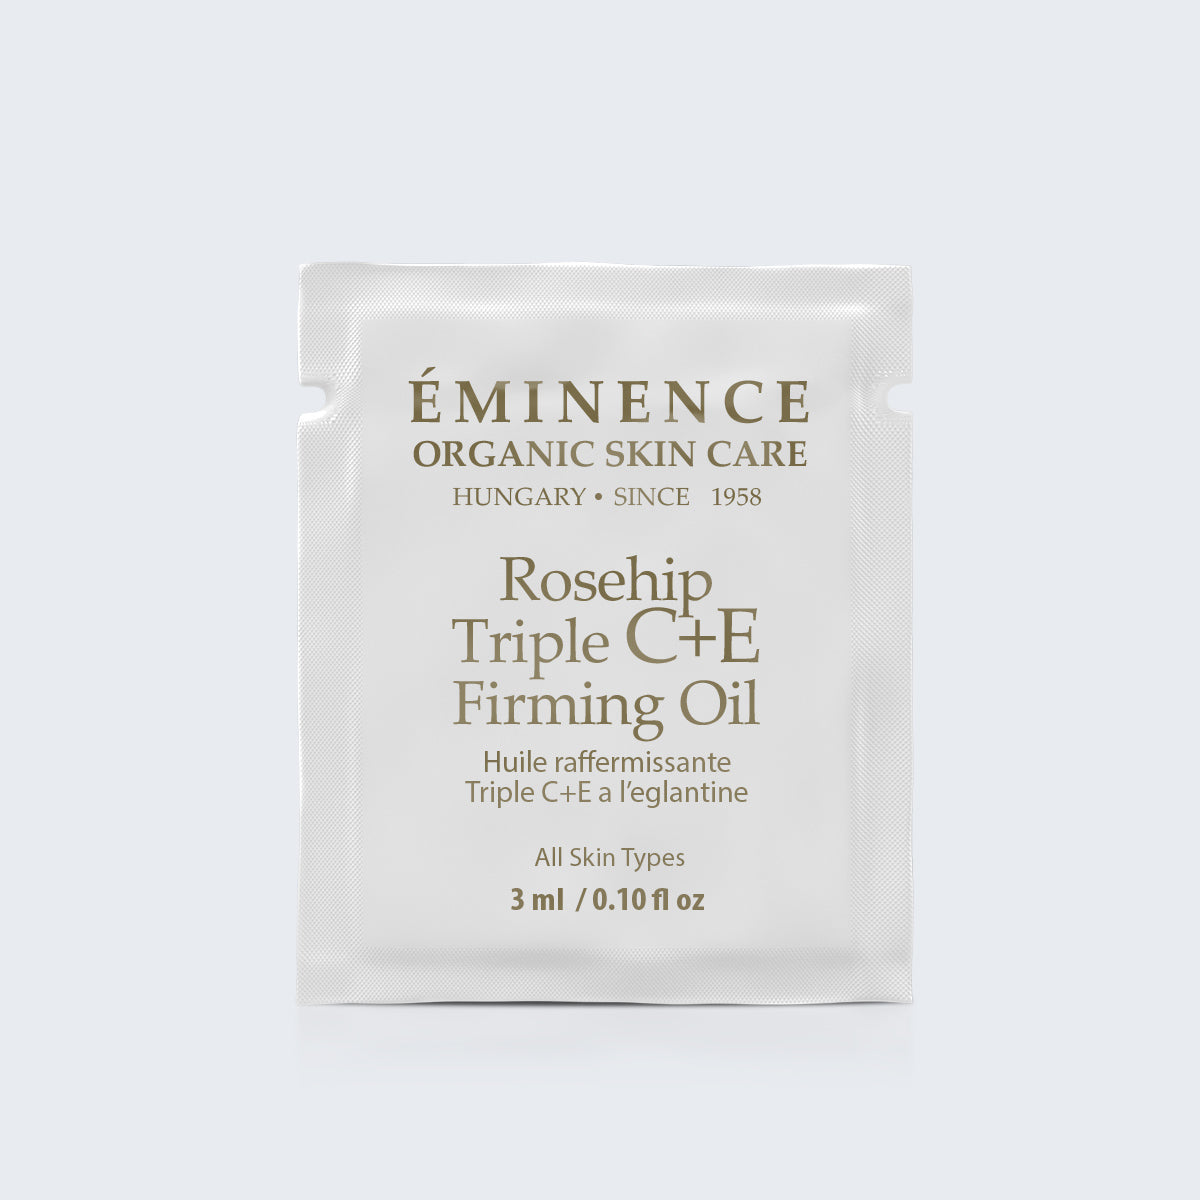 Eminence Organics Rosehip Triple C+E Firming Oil Card Sample